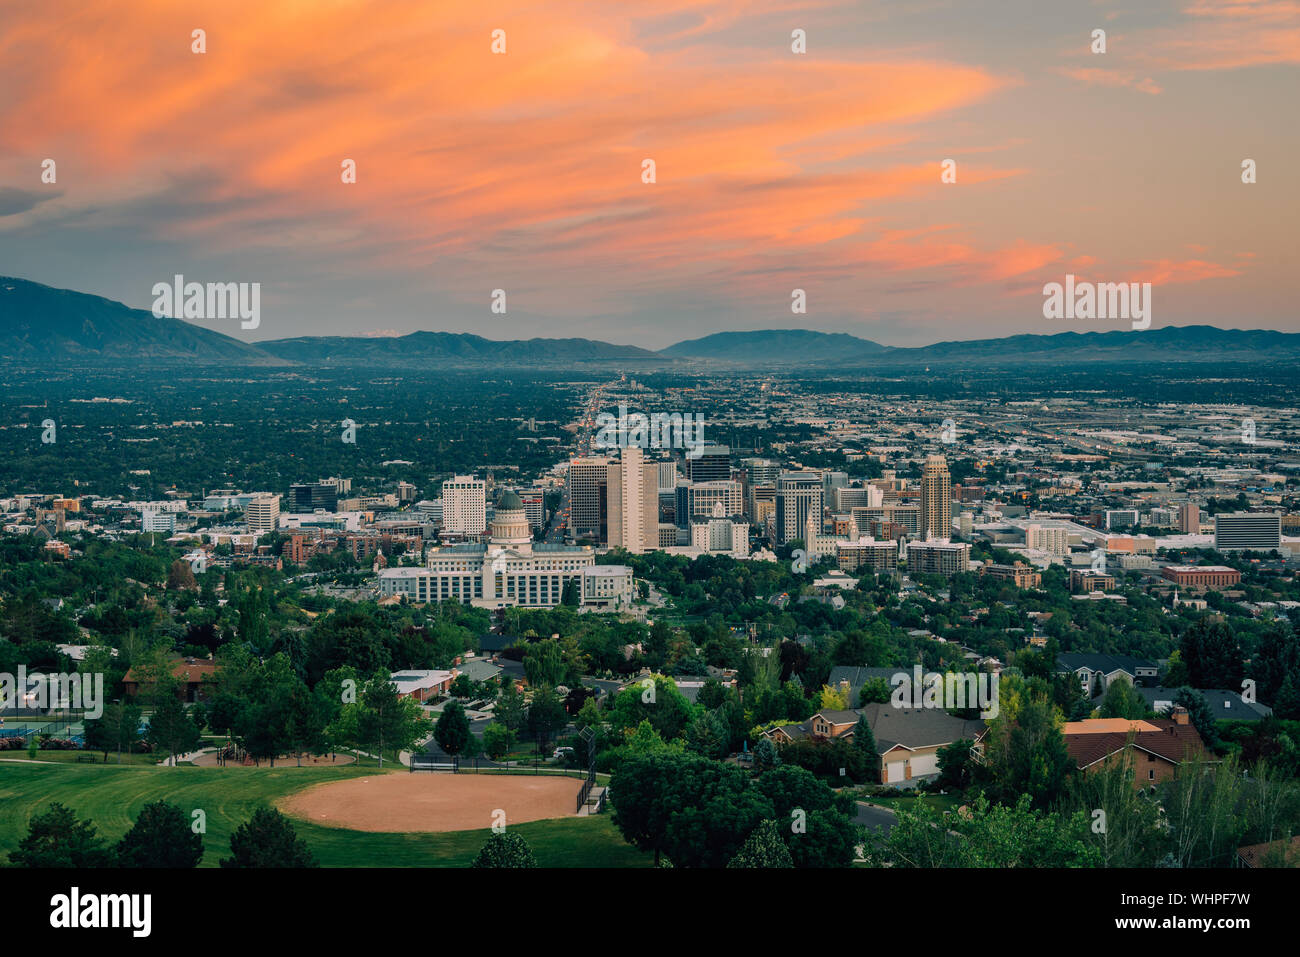 View of downtown at sunset, from Ensign Peak, in Salt Lake City, Utah Stock Photo